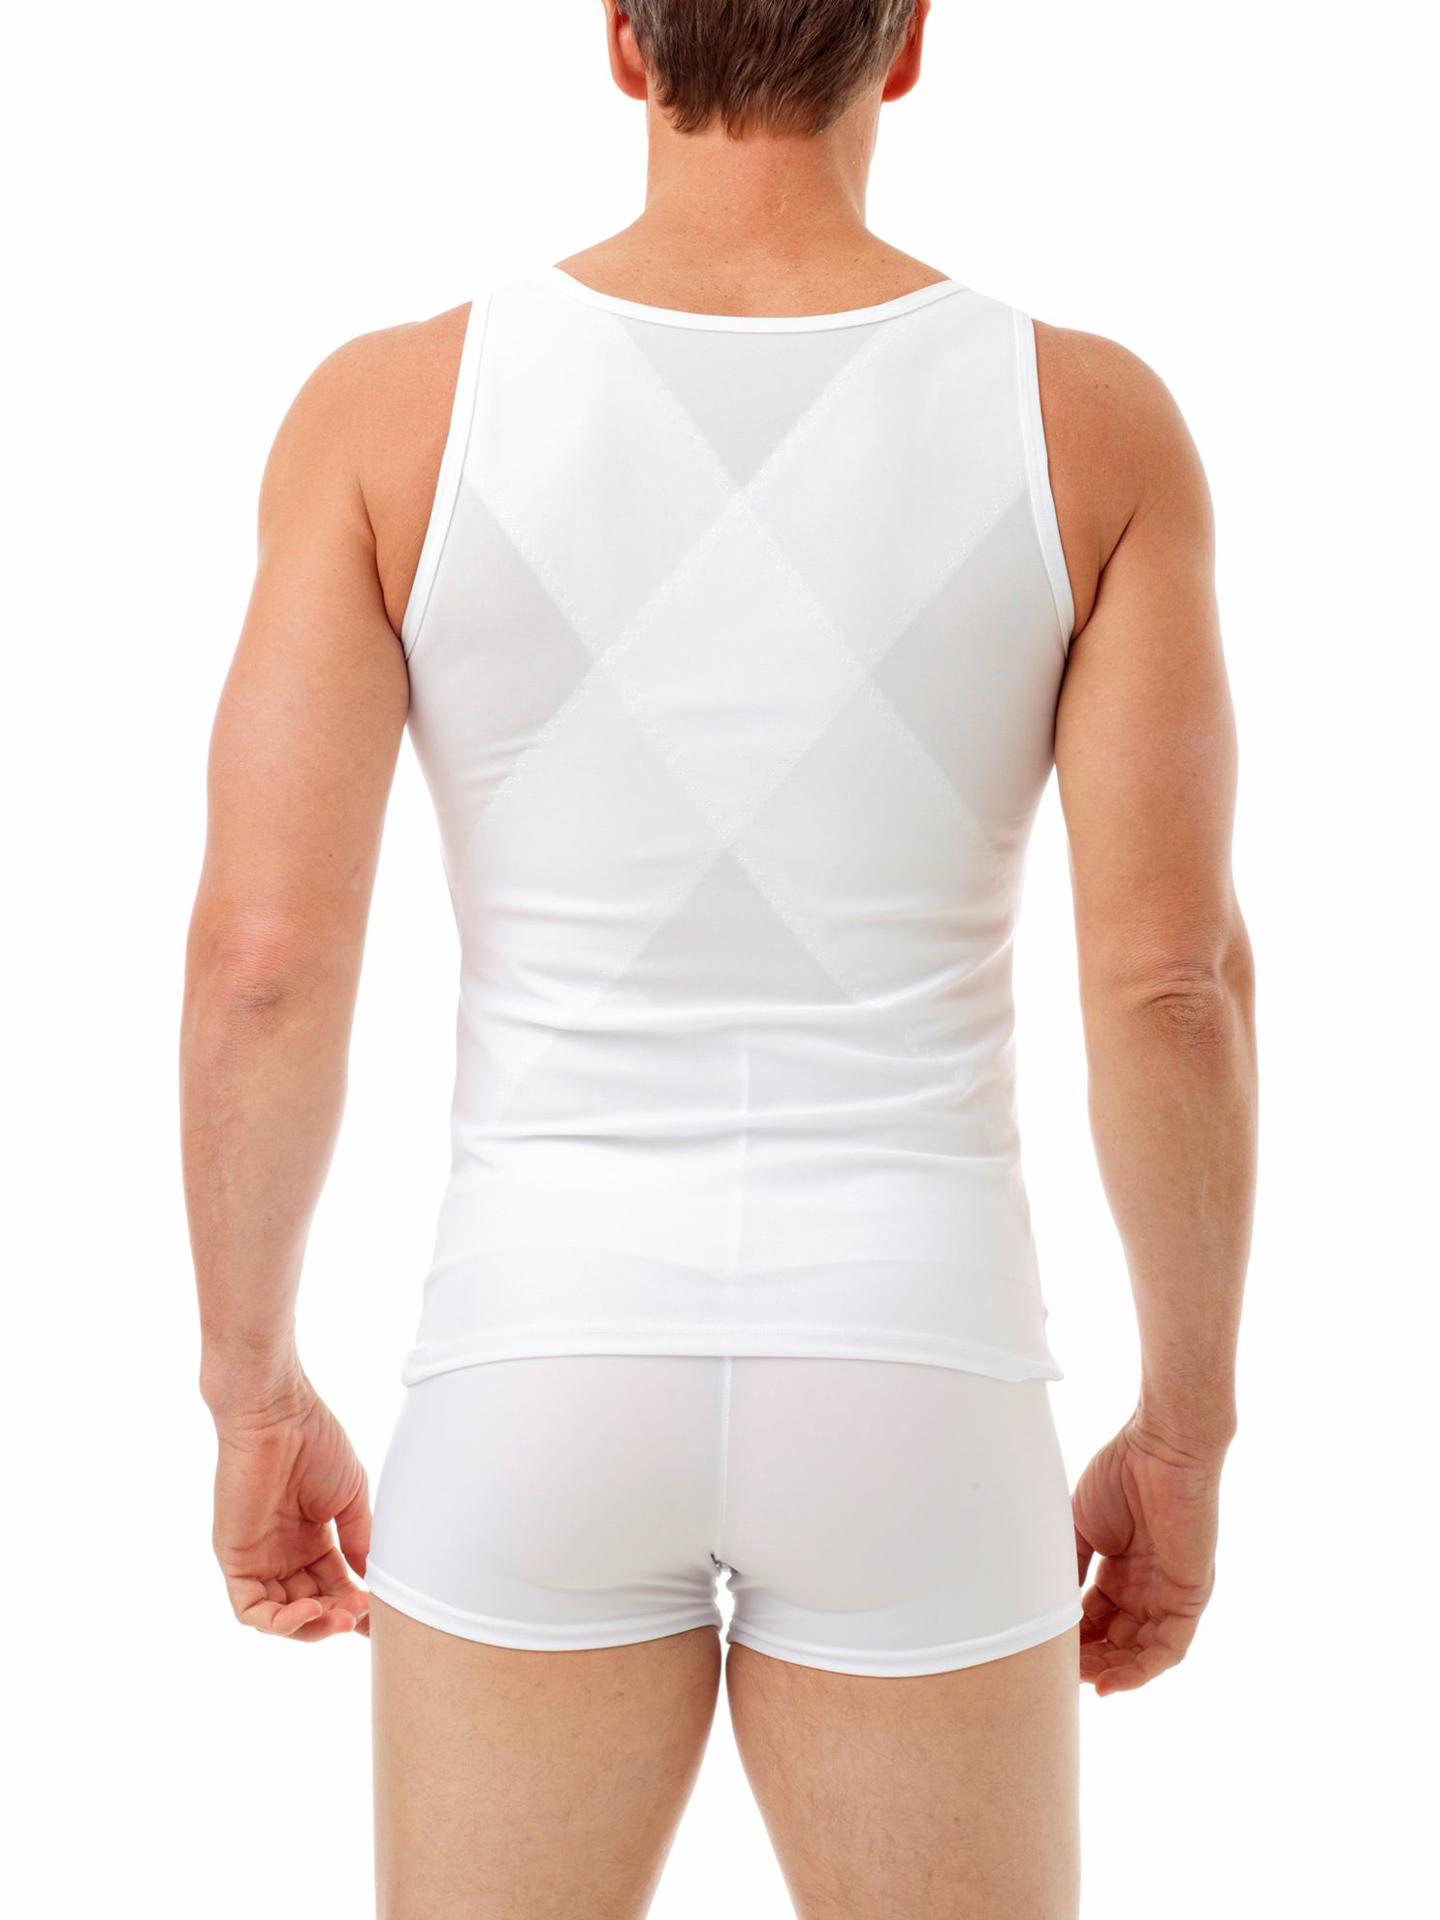 https://www.underworks.com/images/thumbs/0000071_mens-posture-corrector-compression-shirt.jpeg